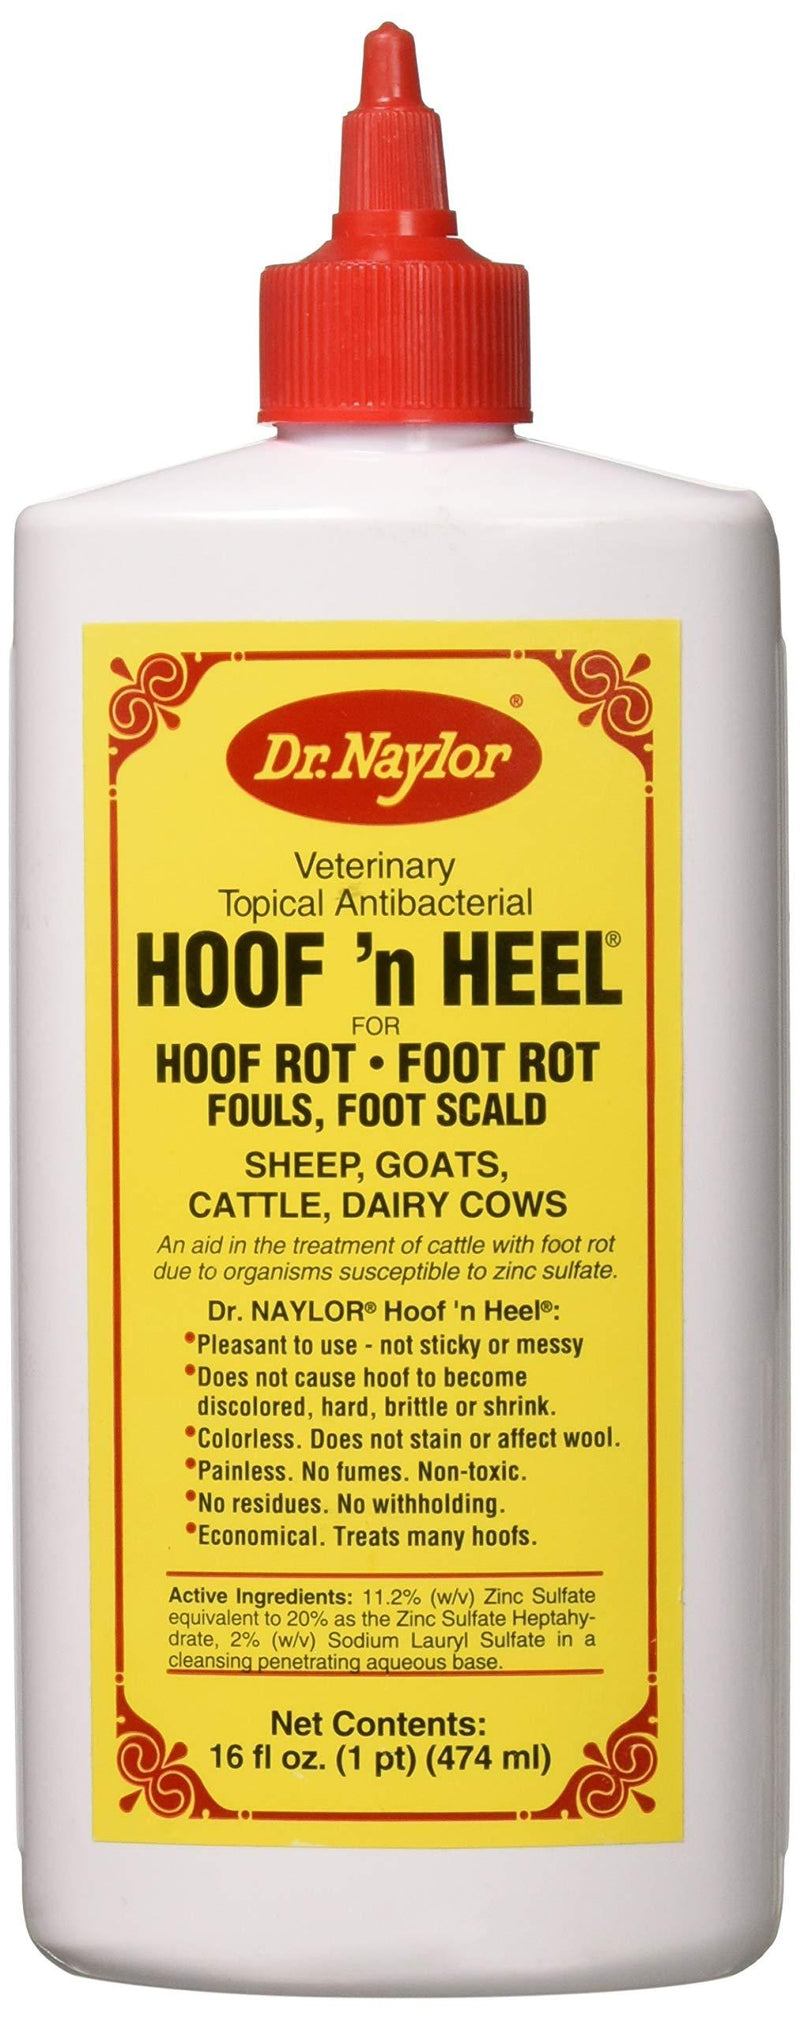 Dr. Naylor Hoof n' Heel (16 oz.) - Traditional Foot Rot Treatment - PawsPlanet Australia